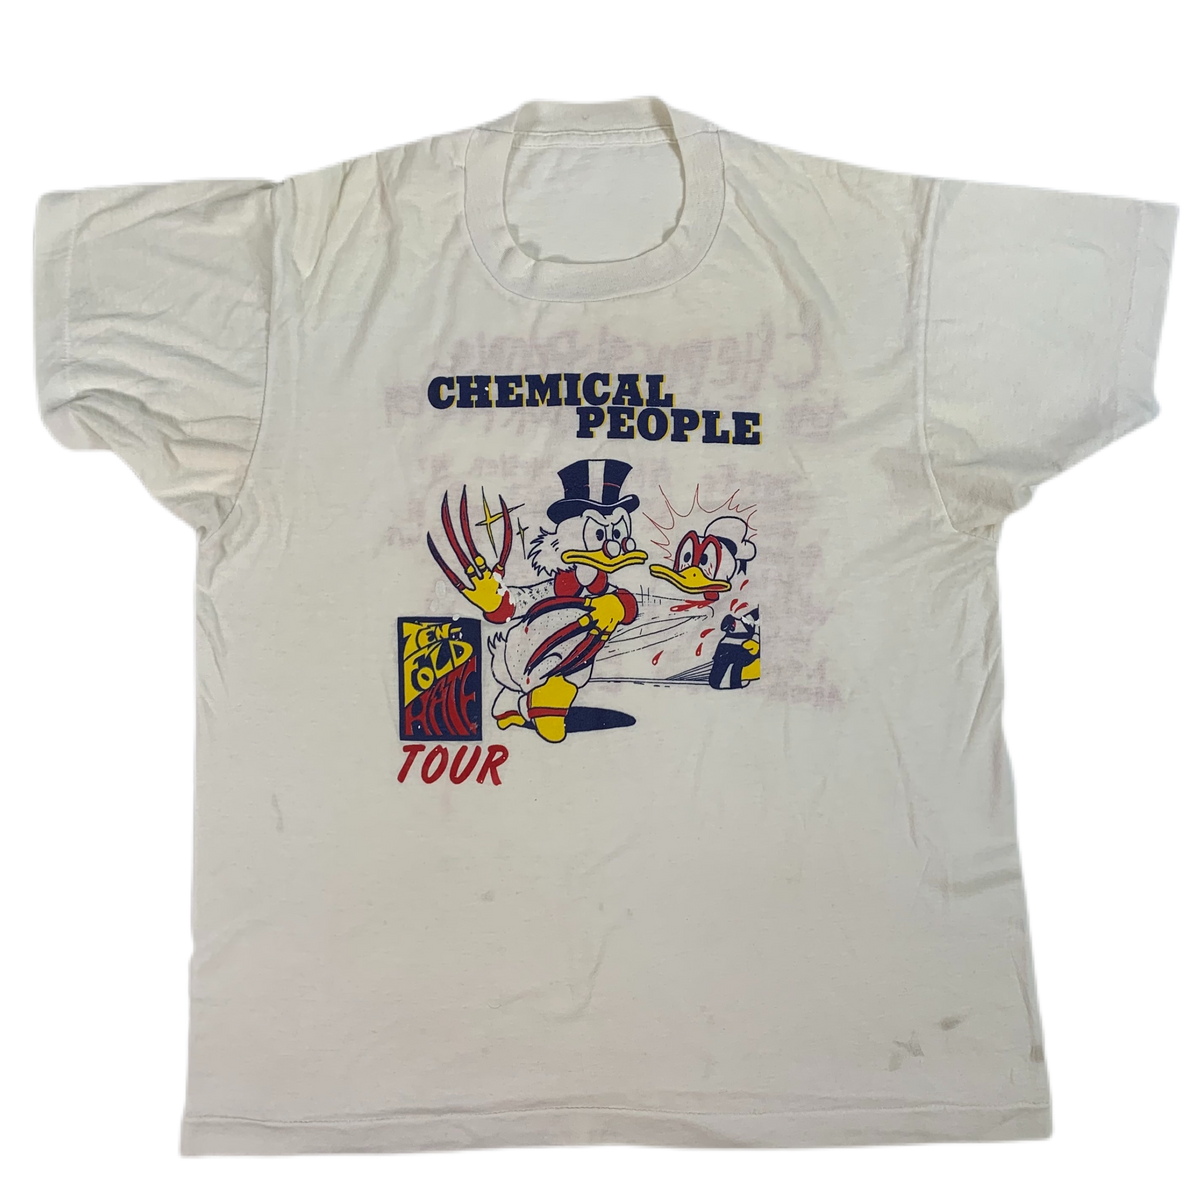 Vintage Chemical People &quot;Ten Fold Hate&quot; T-Shirt